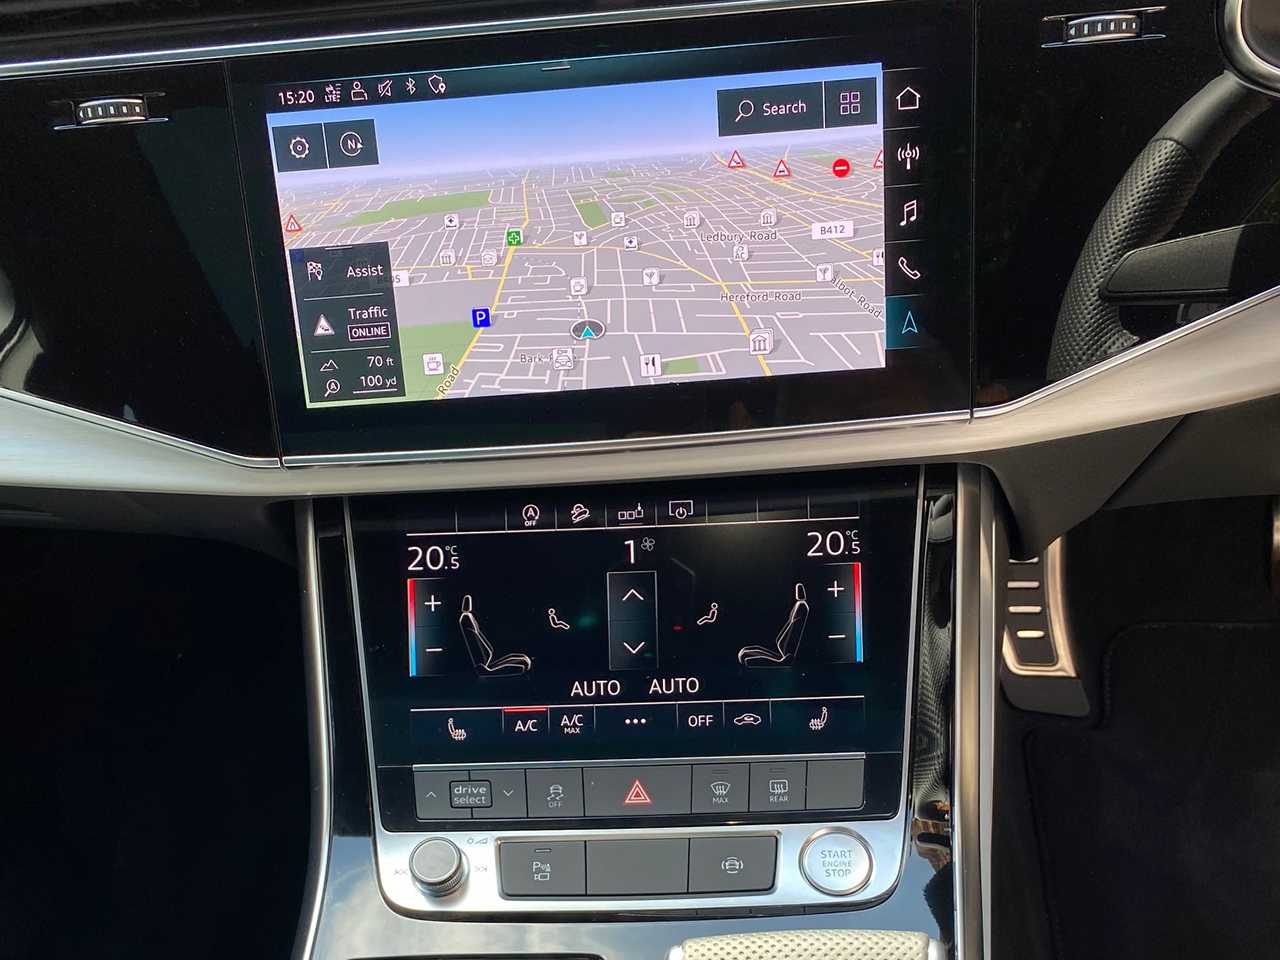 Audi Q7 Navigation System